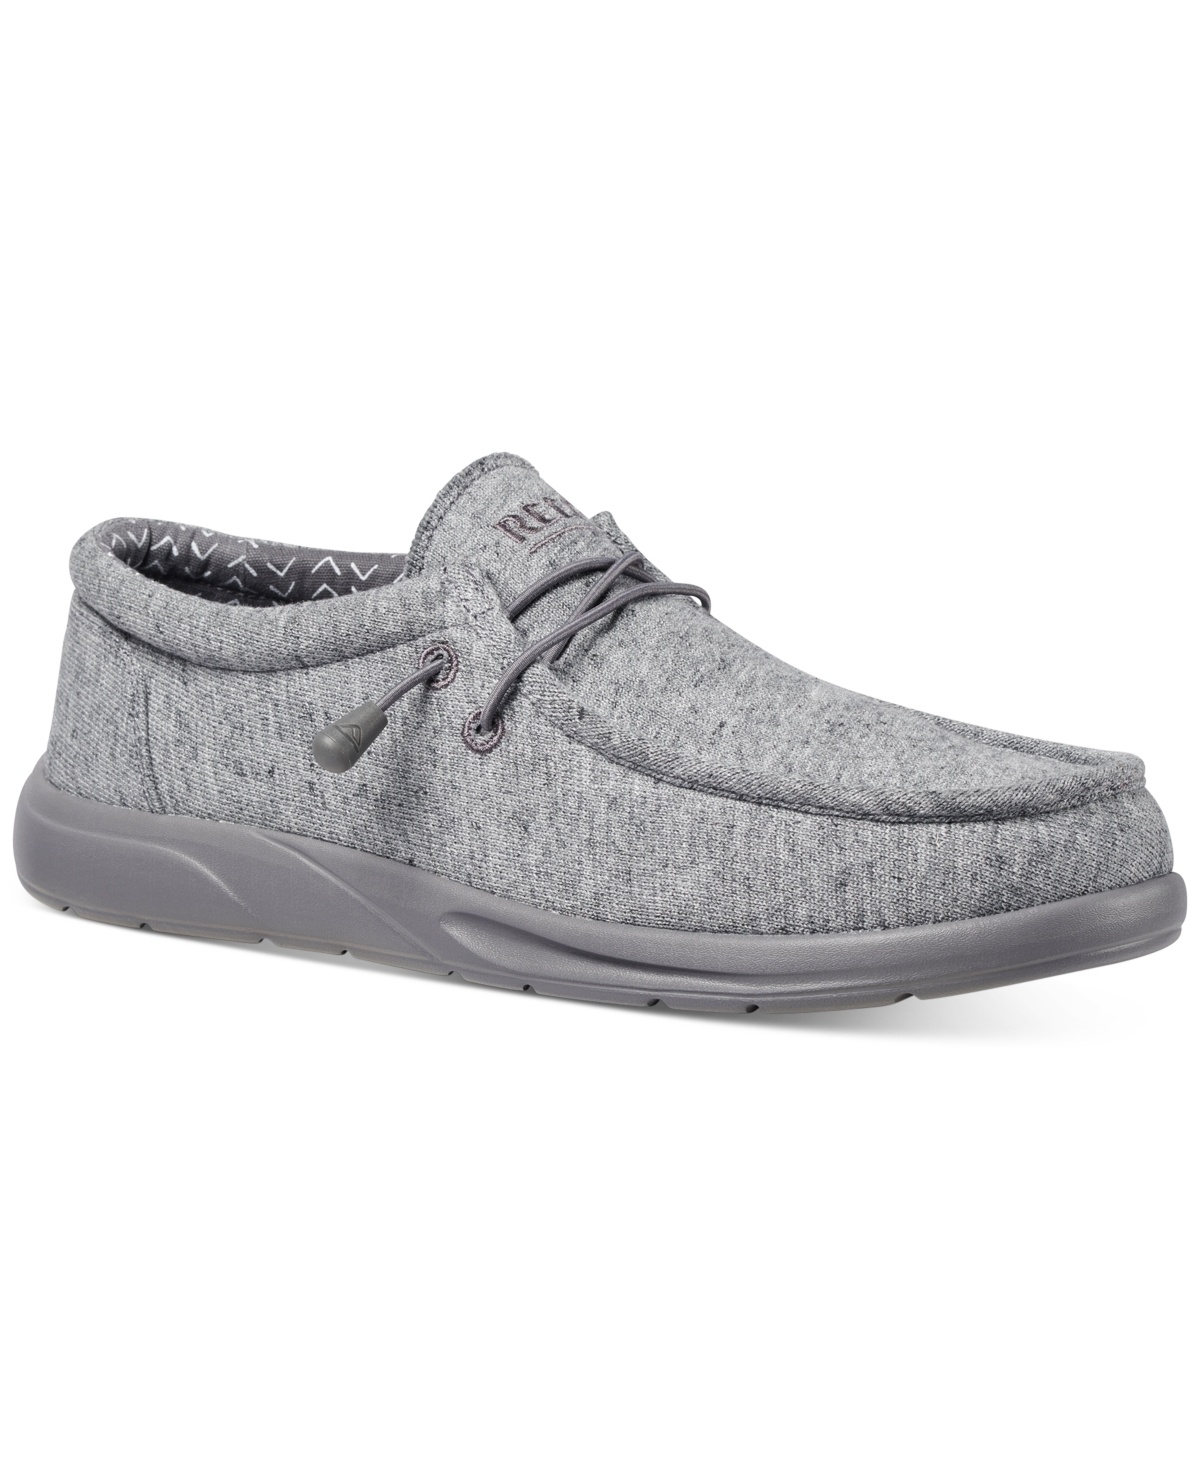 Men's Cushion Coast Shoes - Light Gray